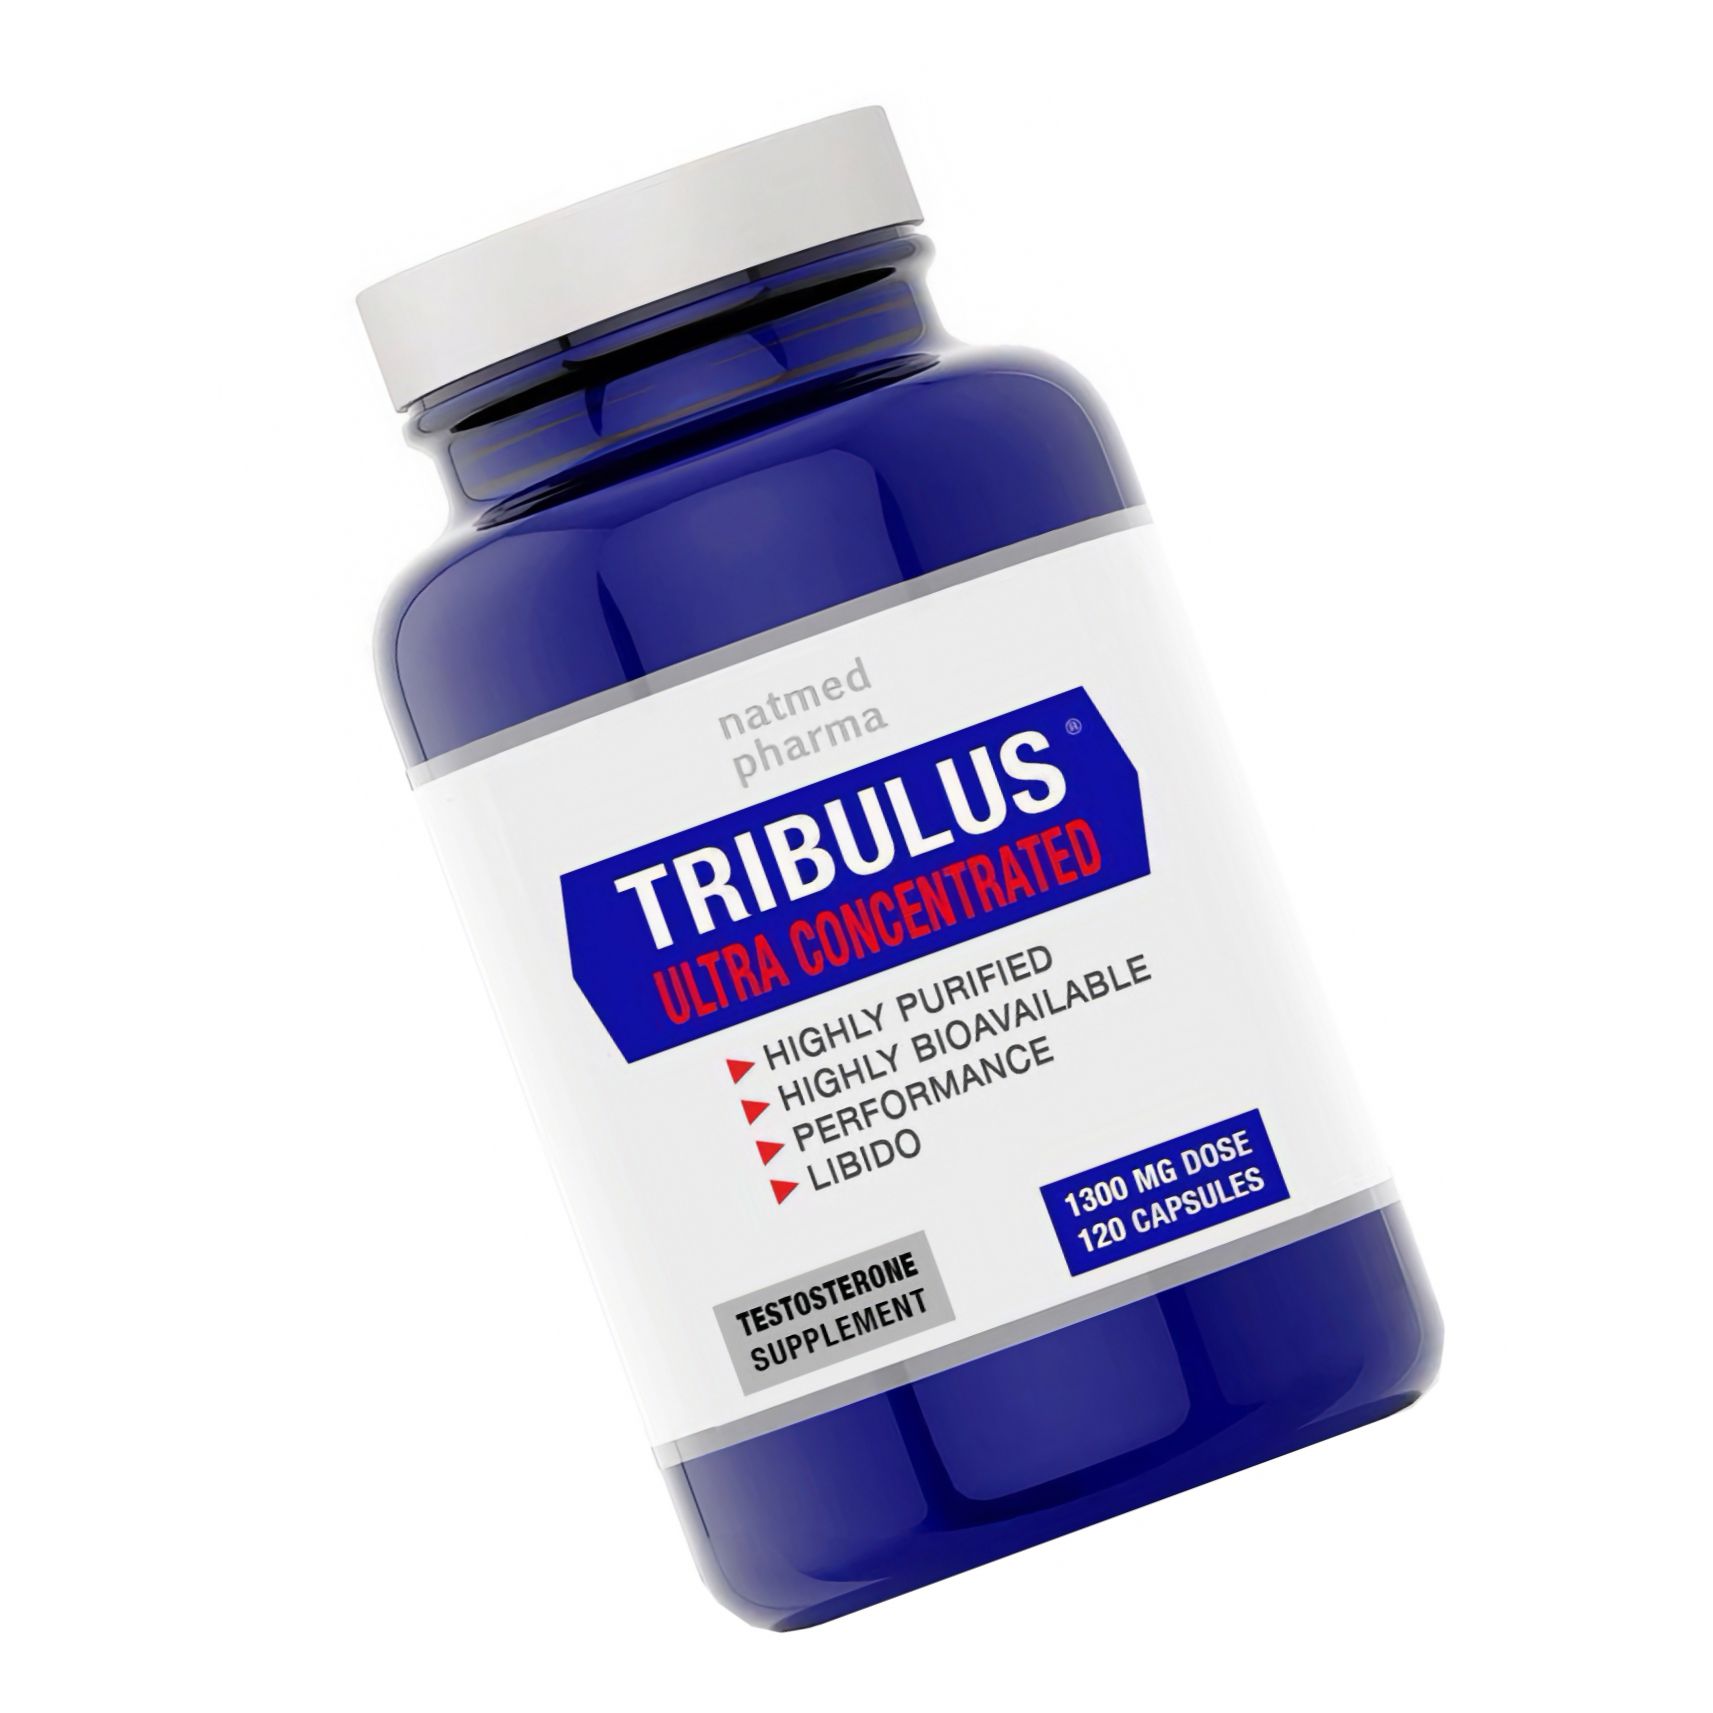 Natmed Pharma Tribulus Ultra Concentrateds